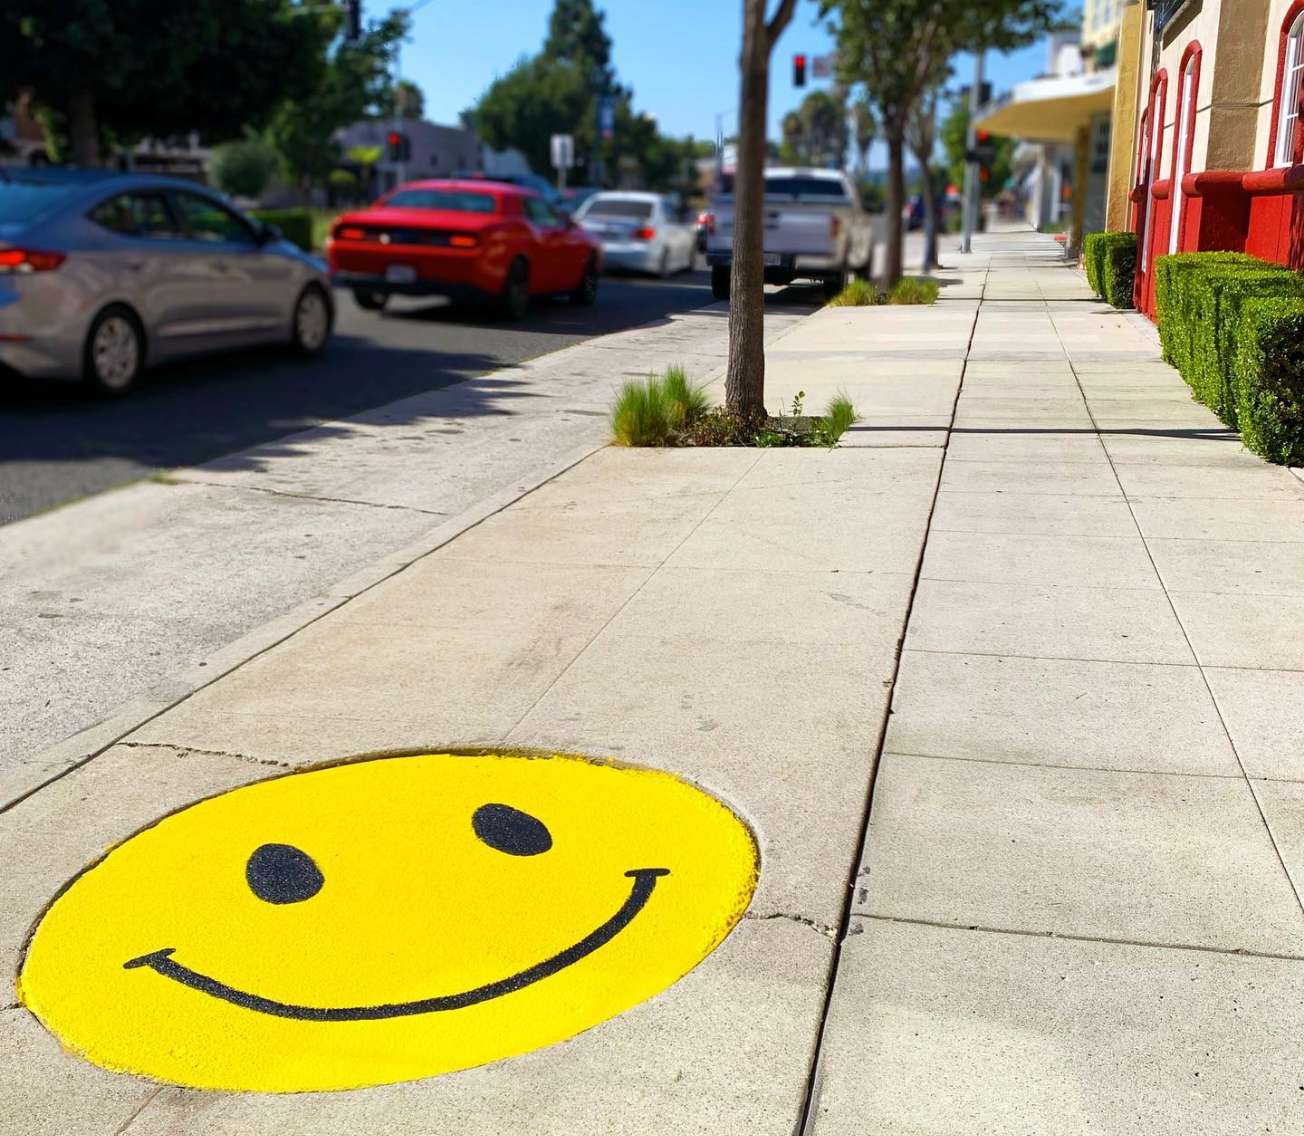 Smiley face decoration on sidewalk